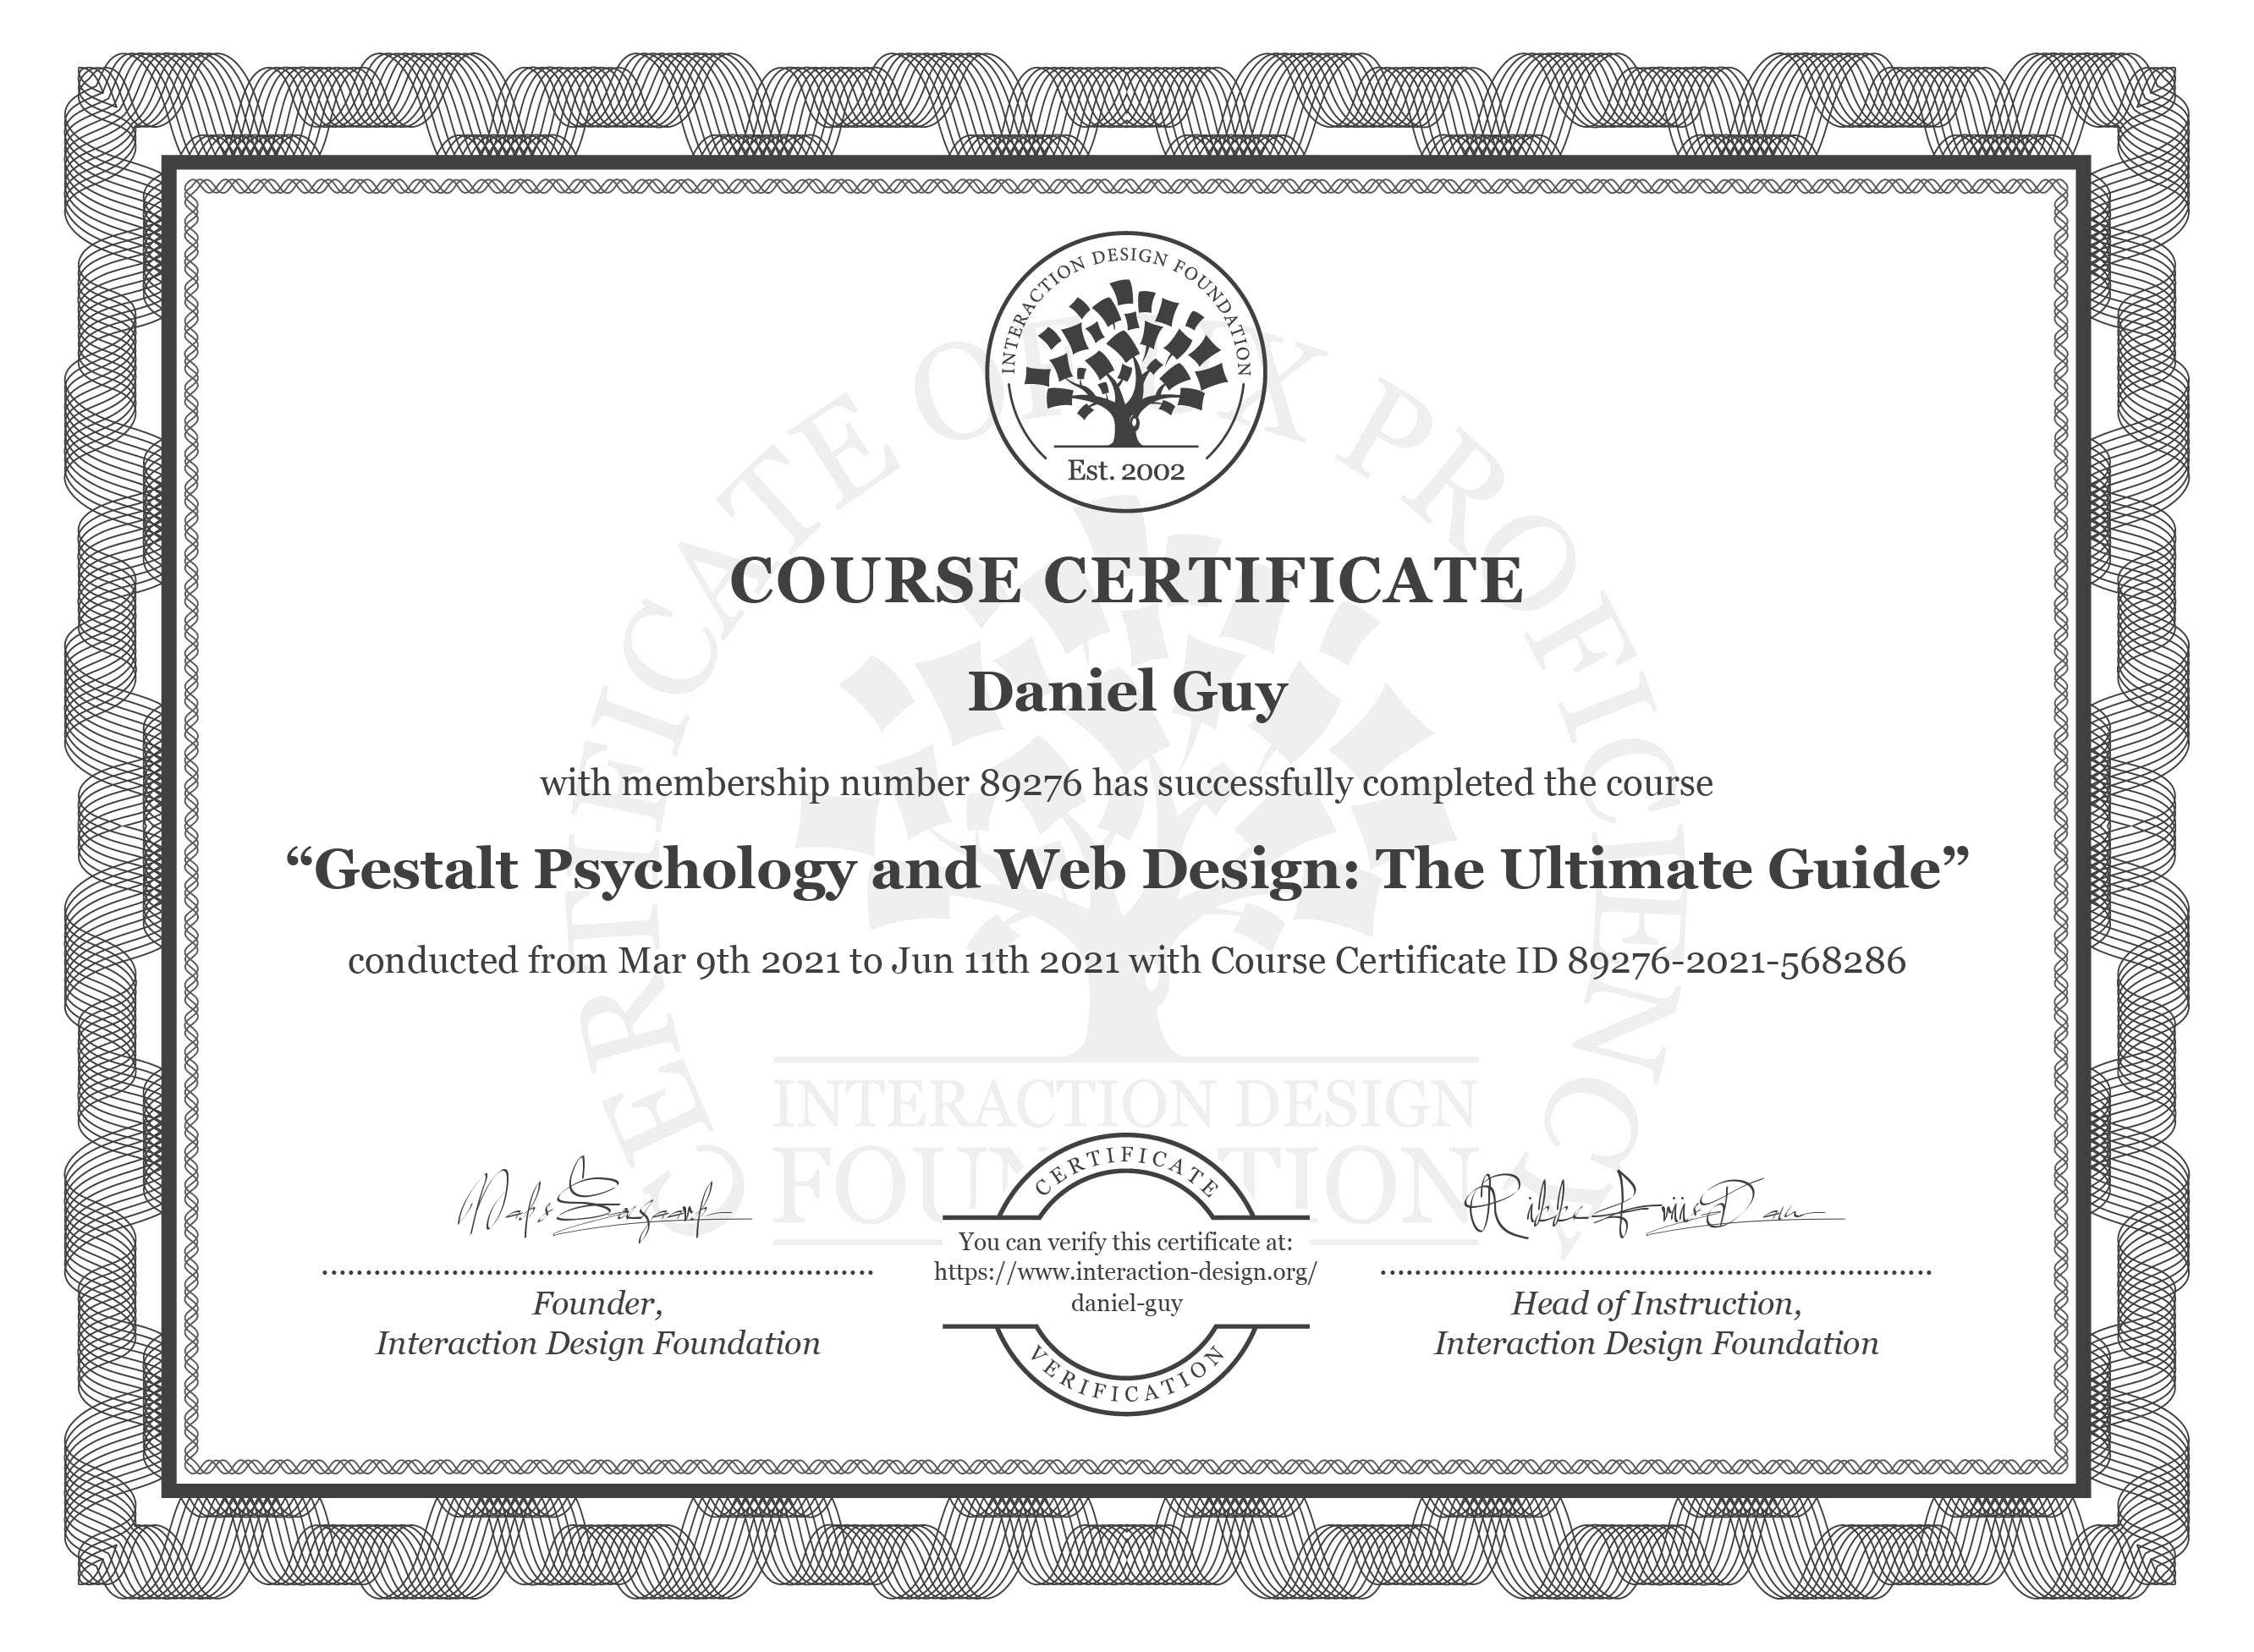 Certificate for Gestalt Psychology course